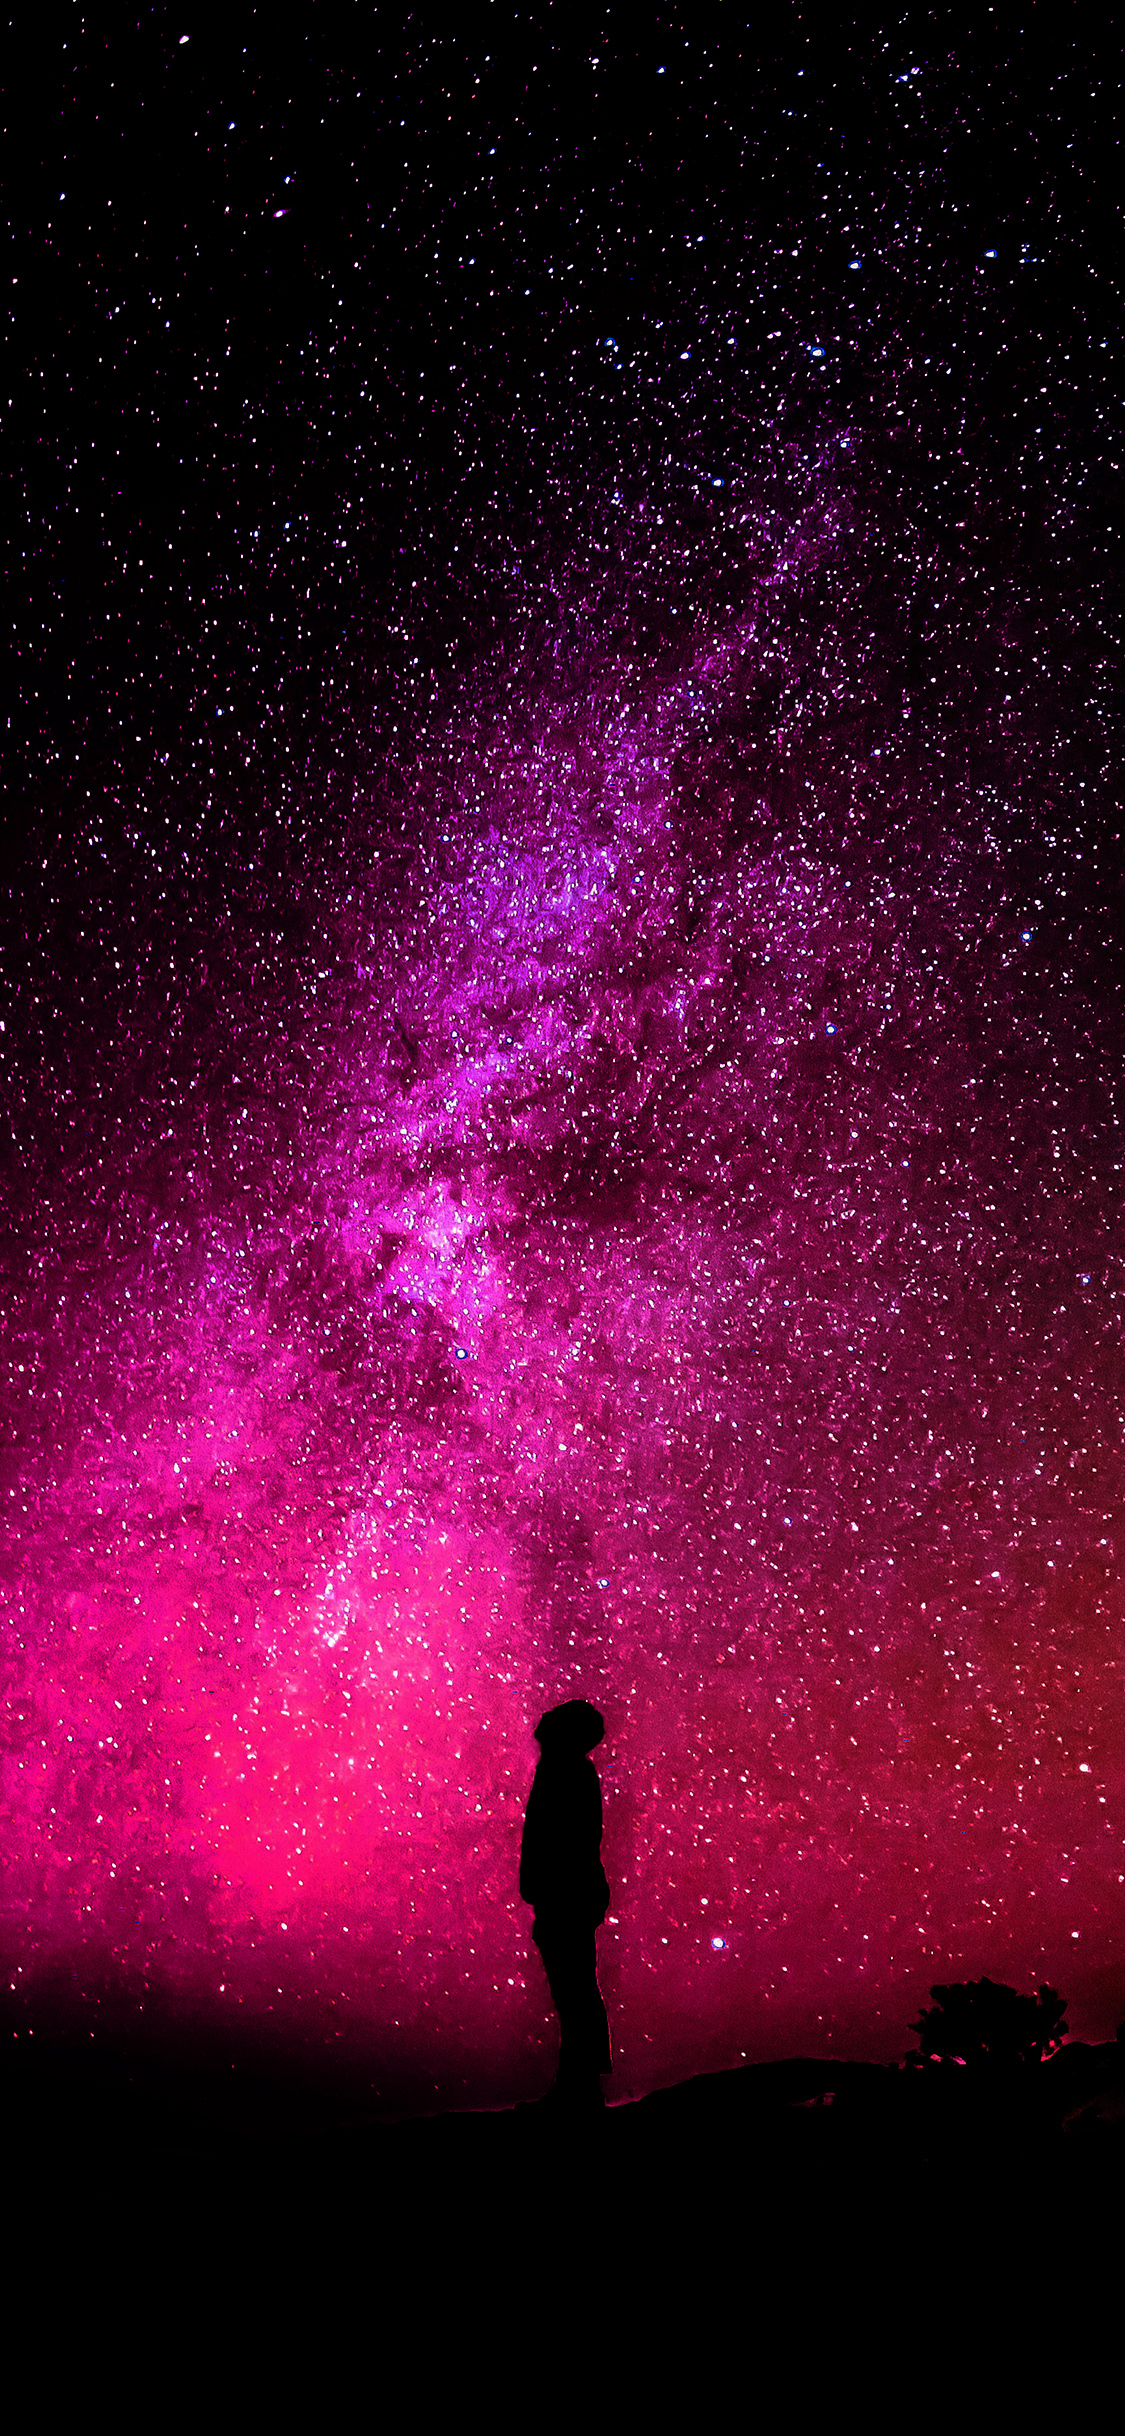 iPhone X wallpaper. sky galaxy